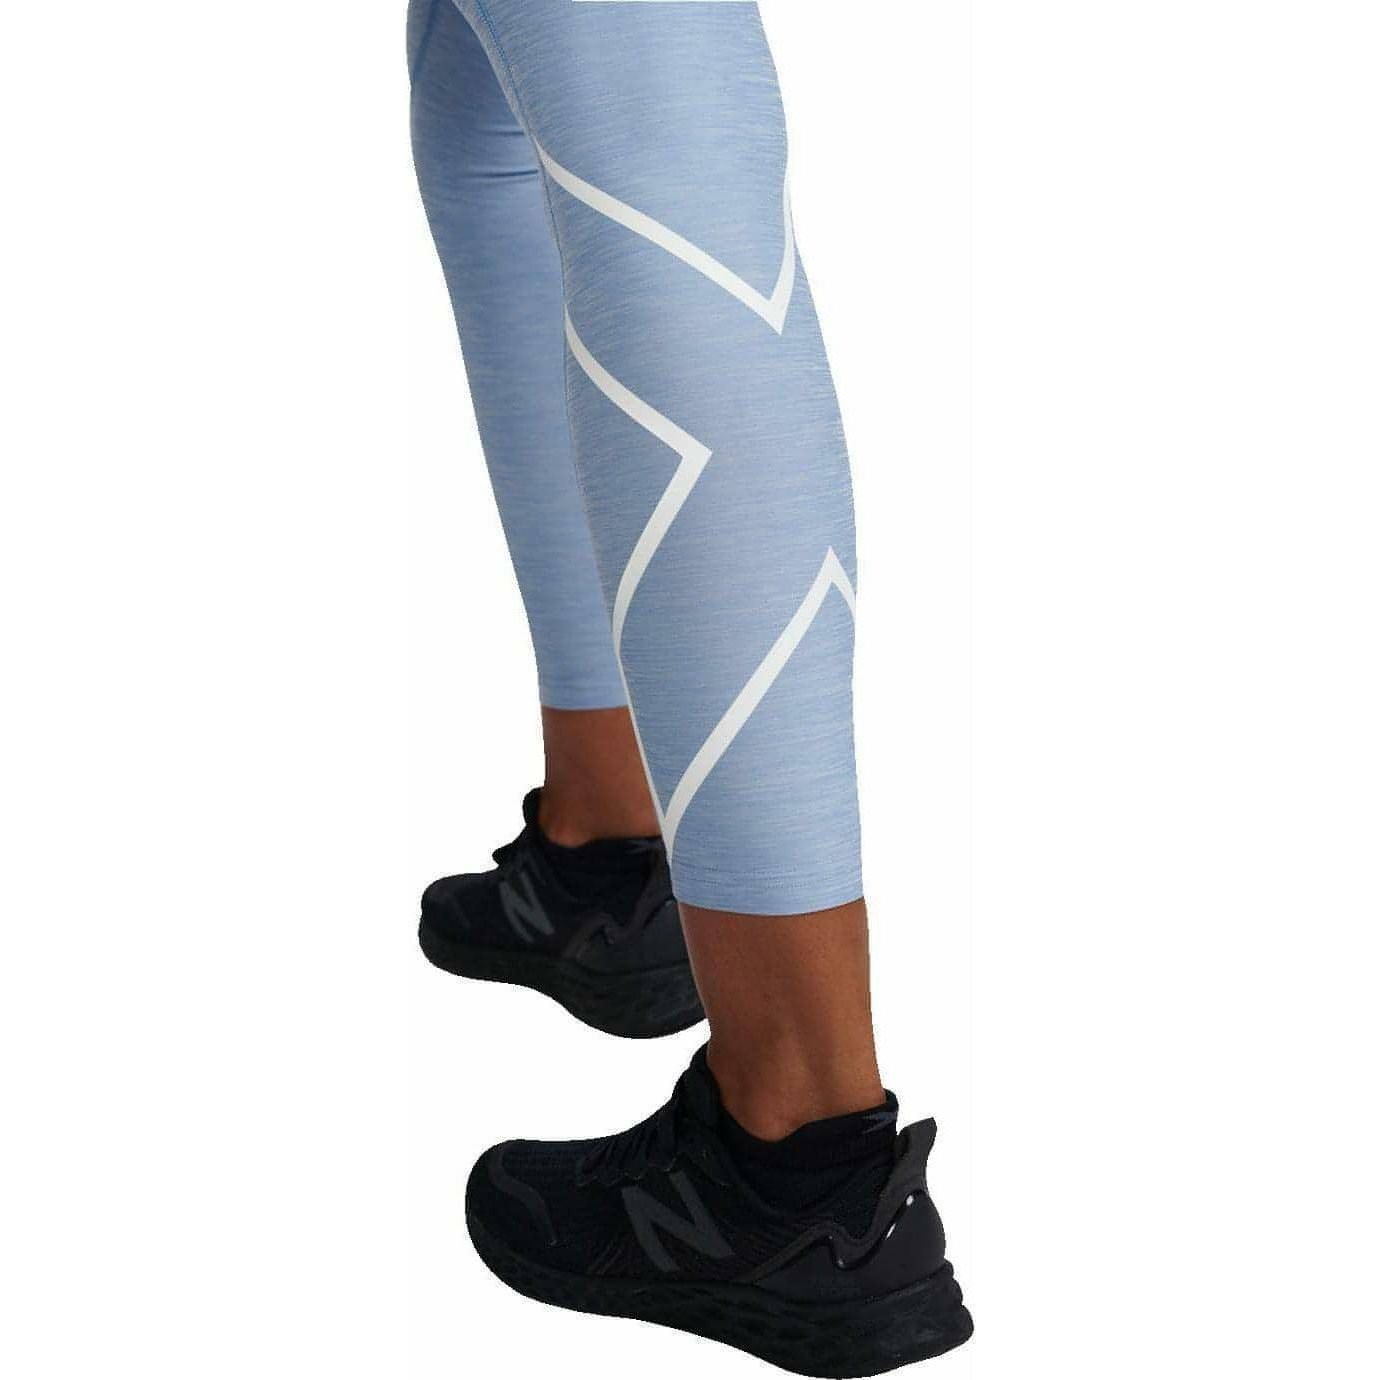 2XU Motion Print Hi-Rise Womens Long Compression Tights - Blue - Start Fitness